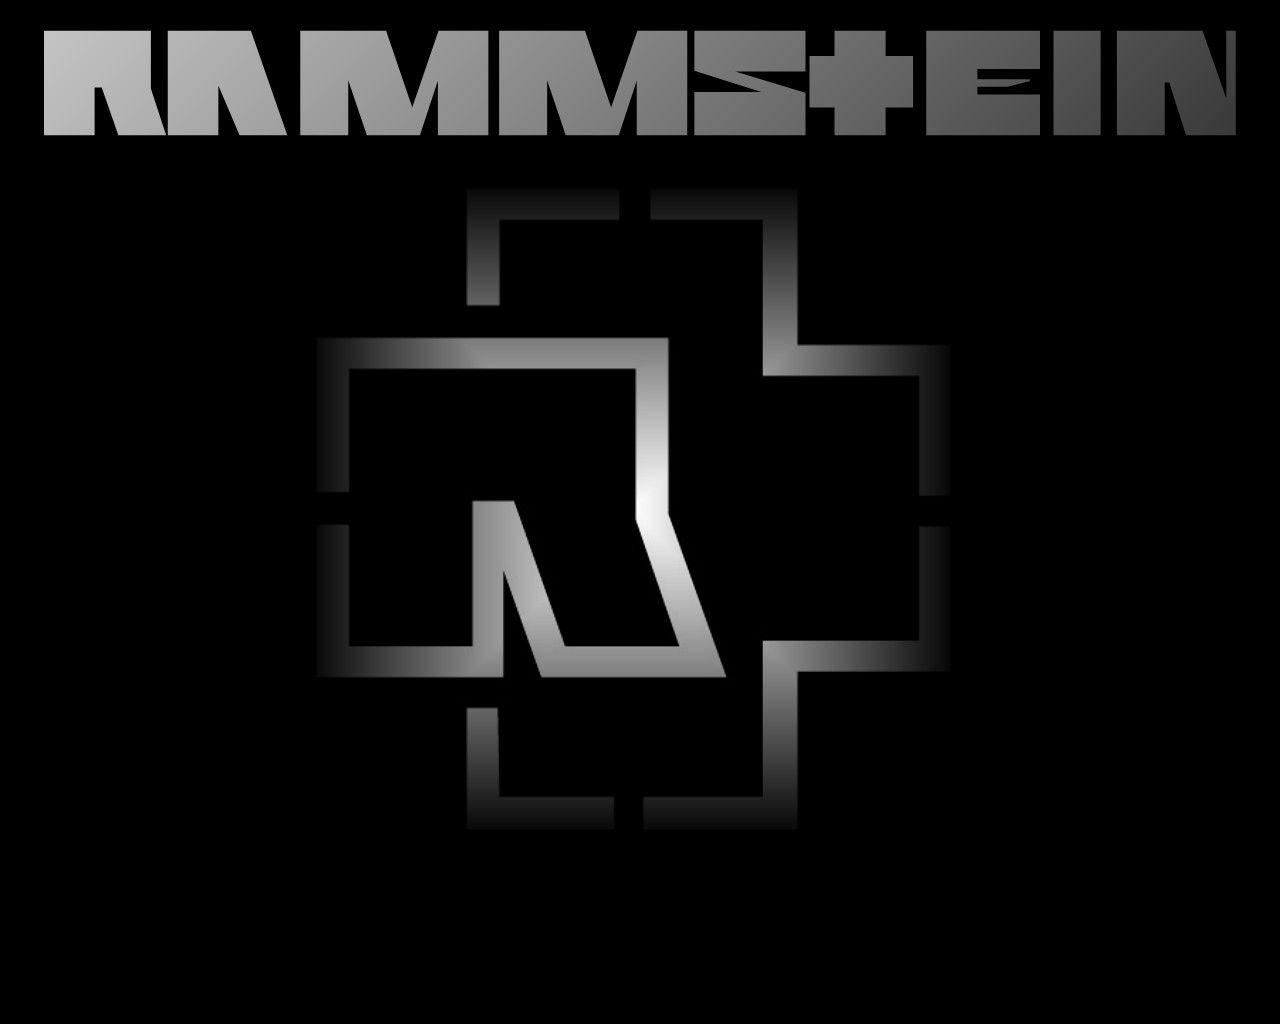 rammstein-logo-wallpapers-wallpaper-cave